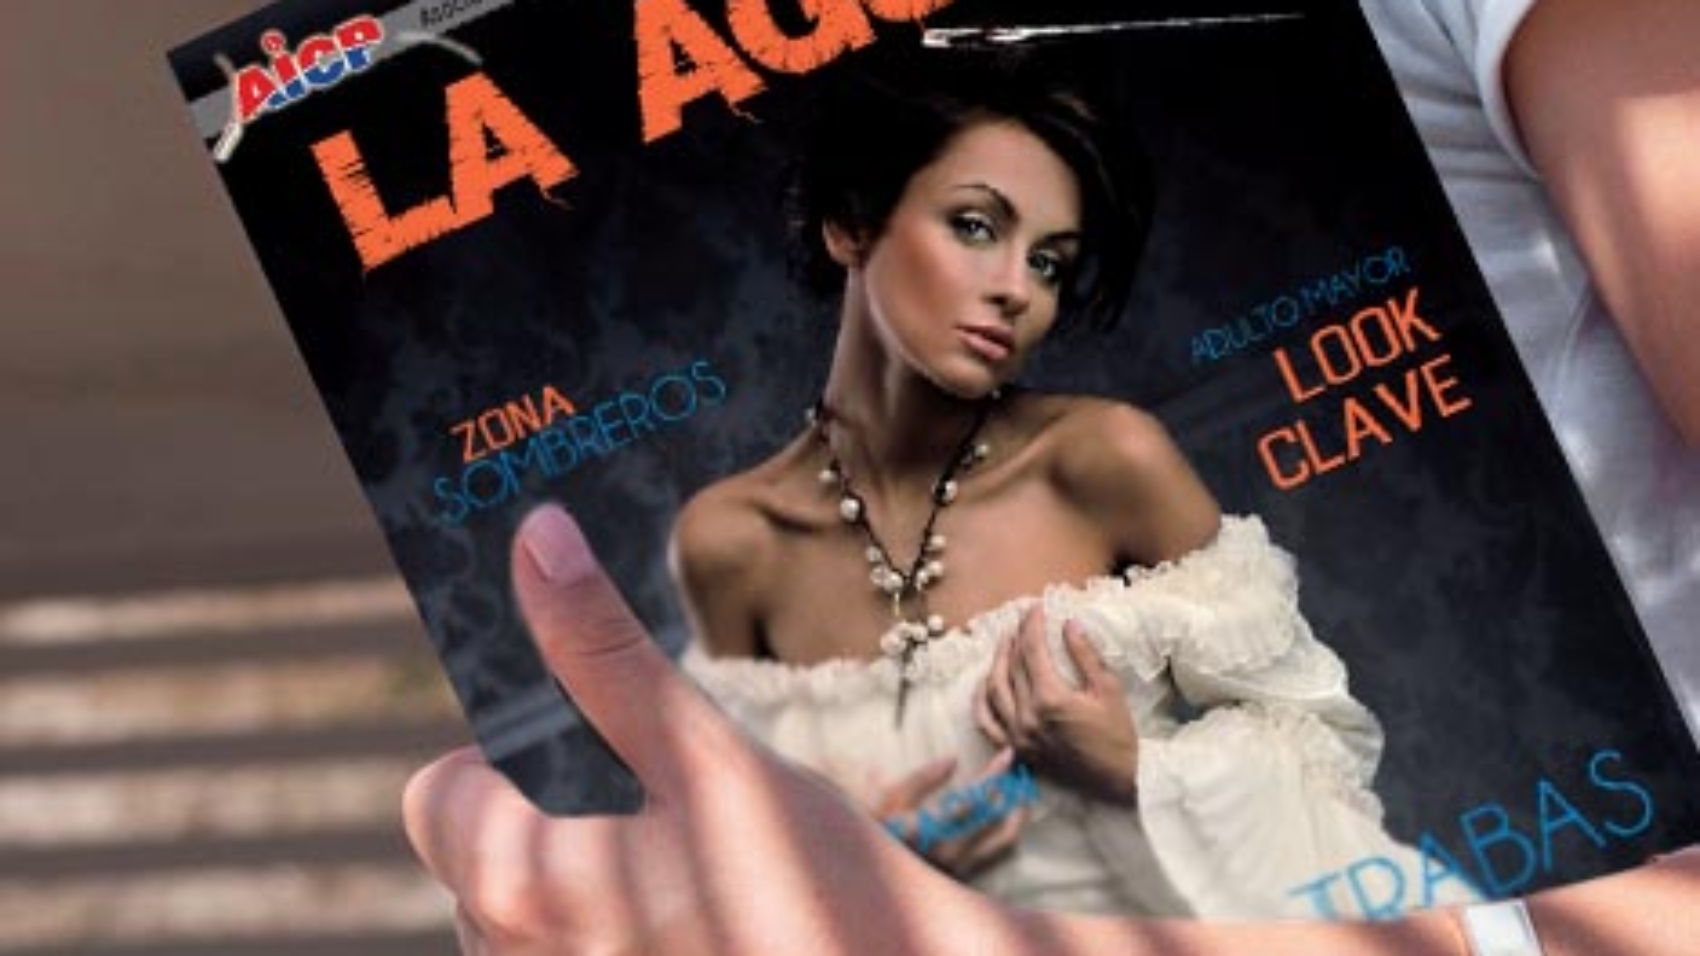 Revista La Aguja